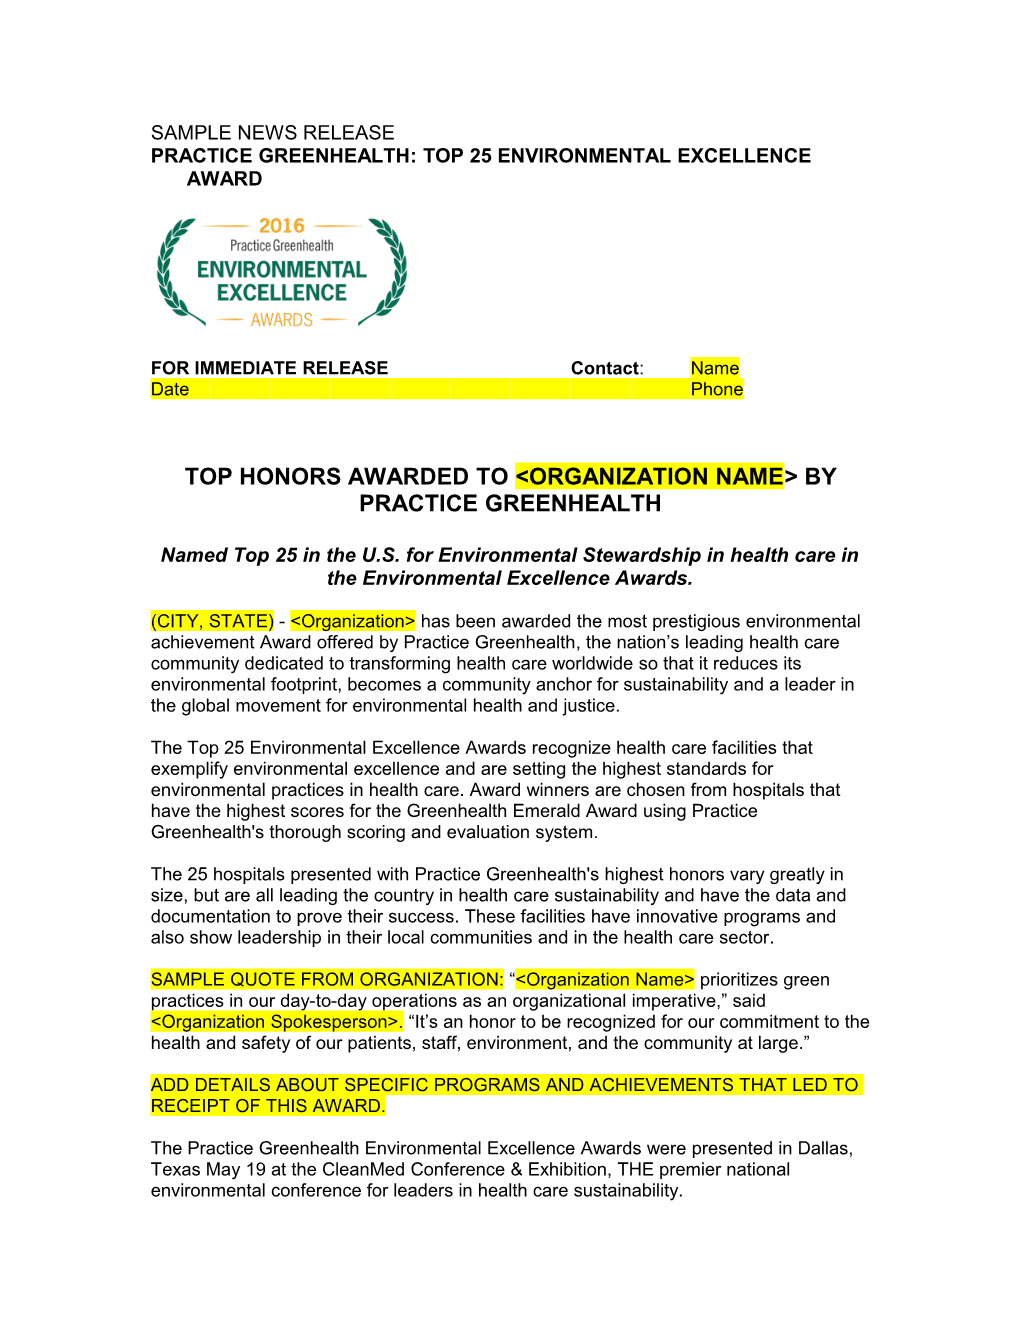 Sample News Release Practice Greenhealth Environmental Leadership Award